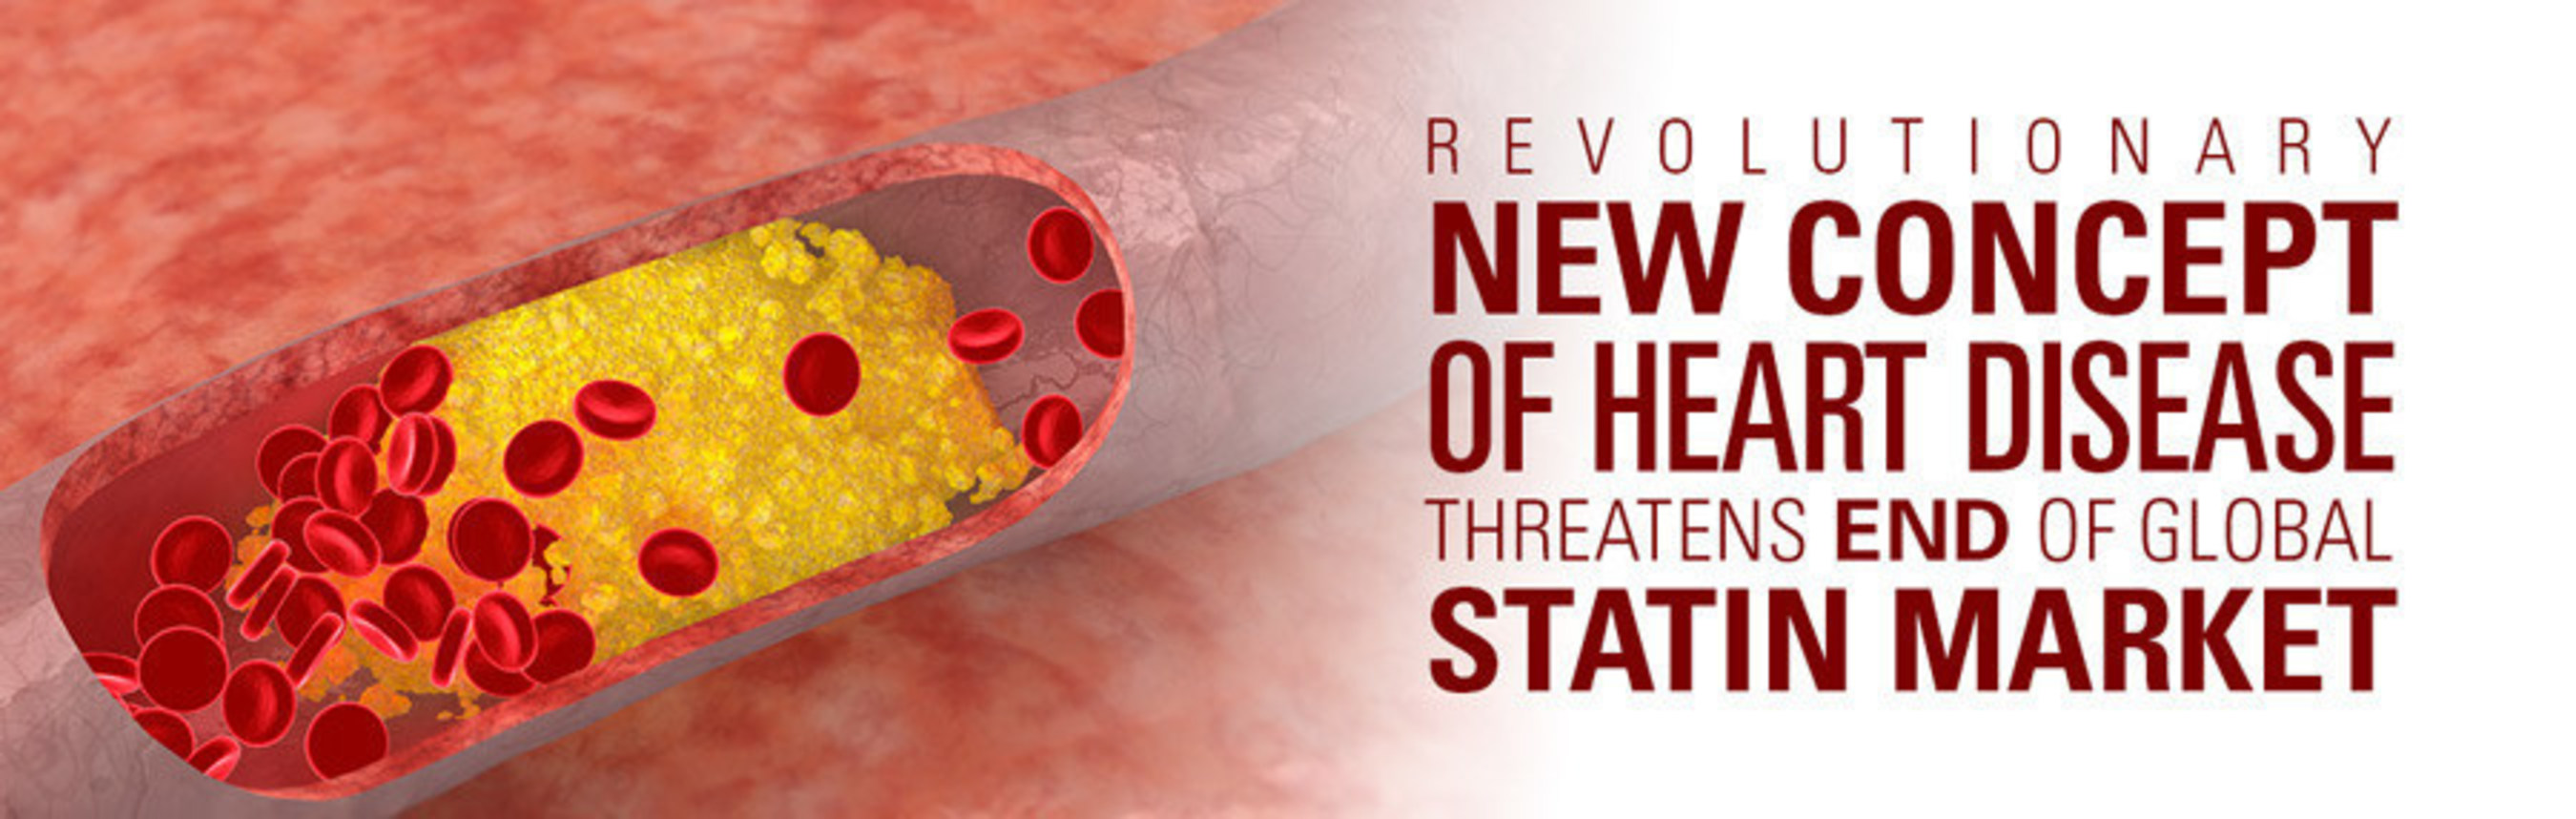 Revolutionary new concept of heart disease threatens end of global statin market